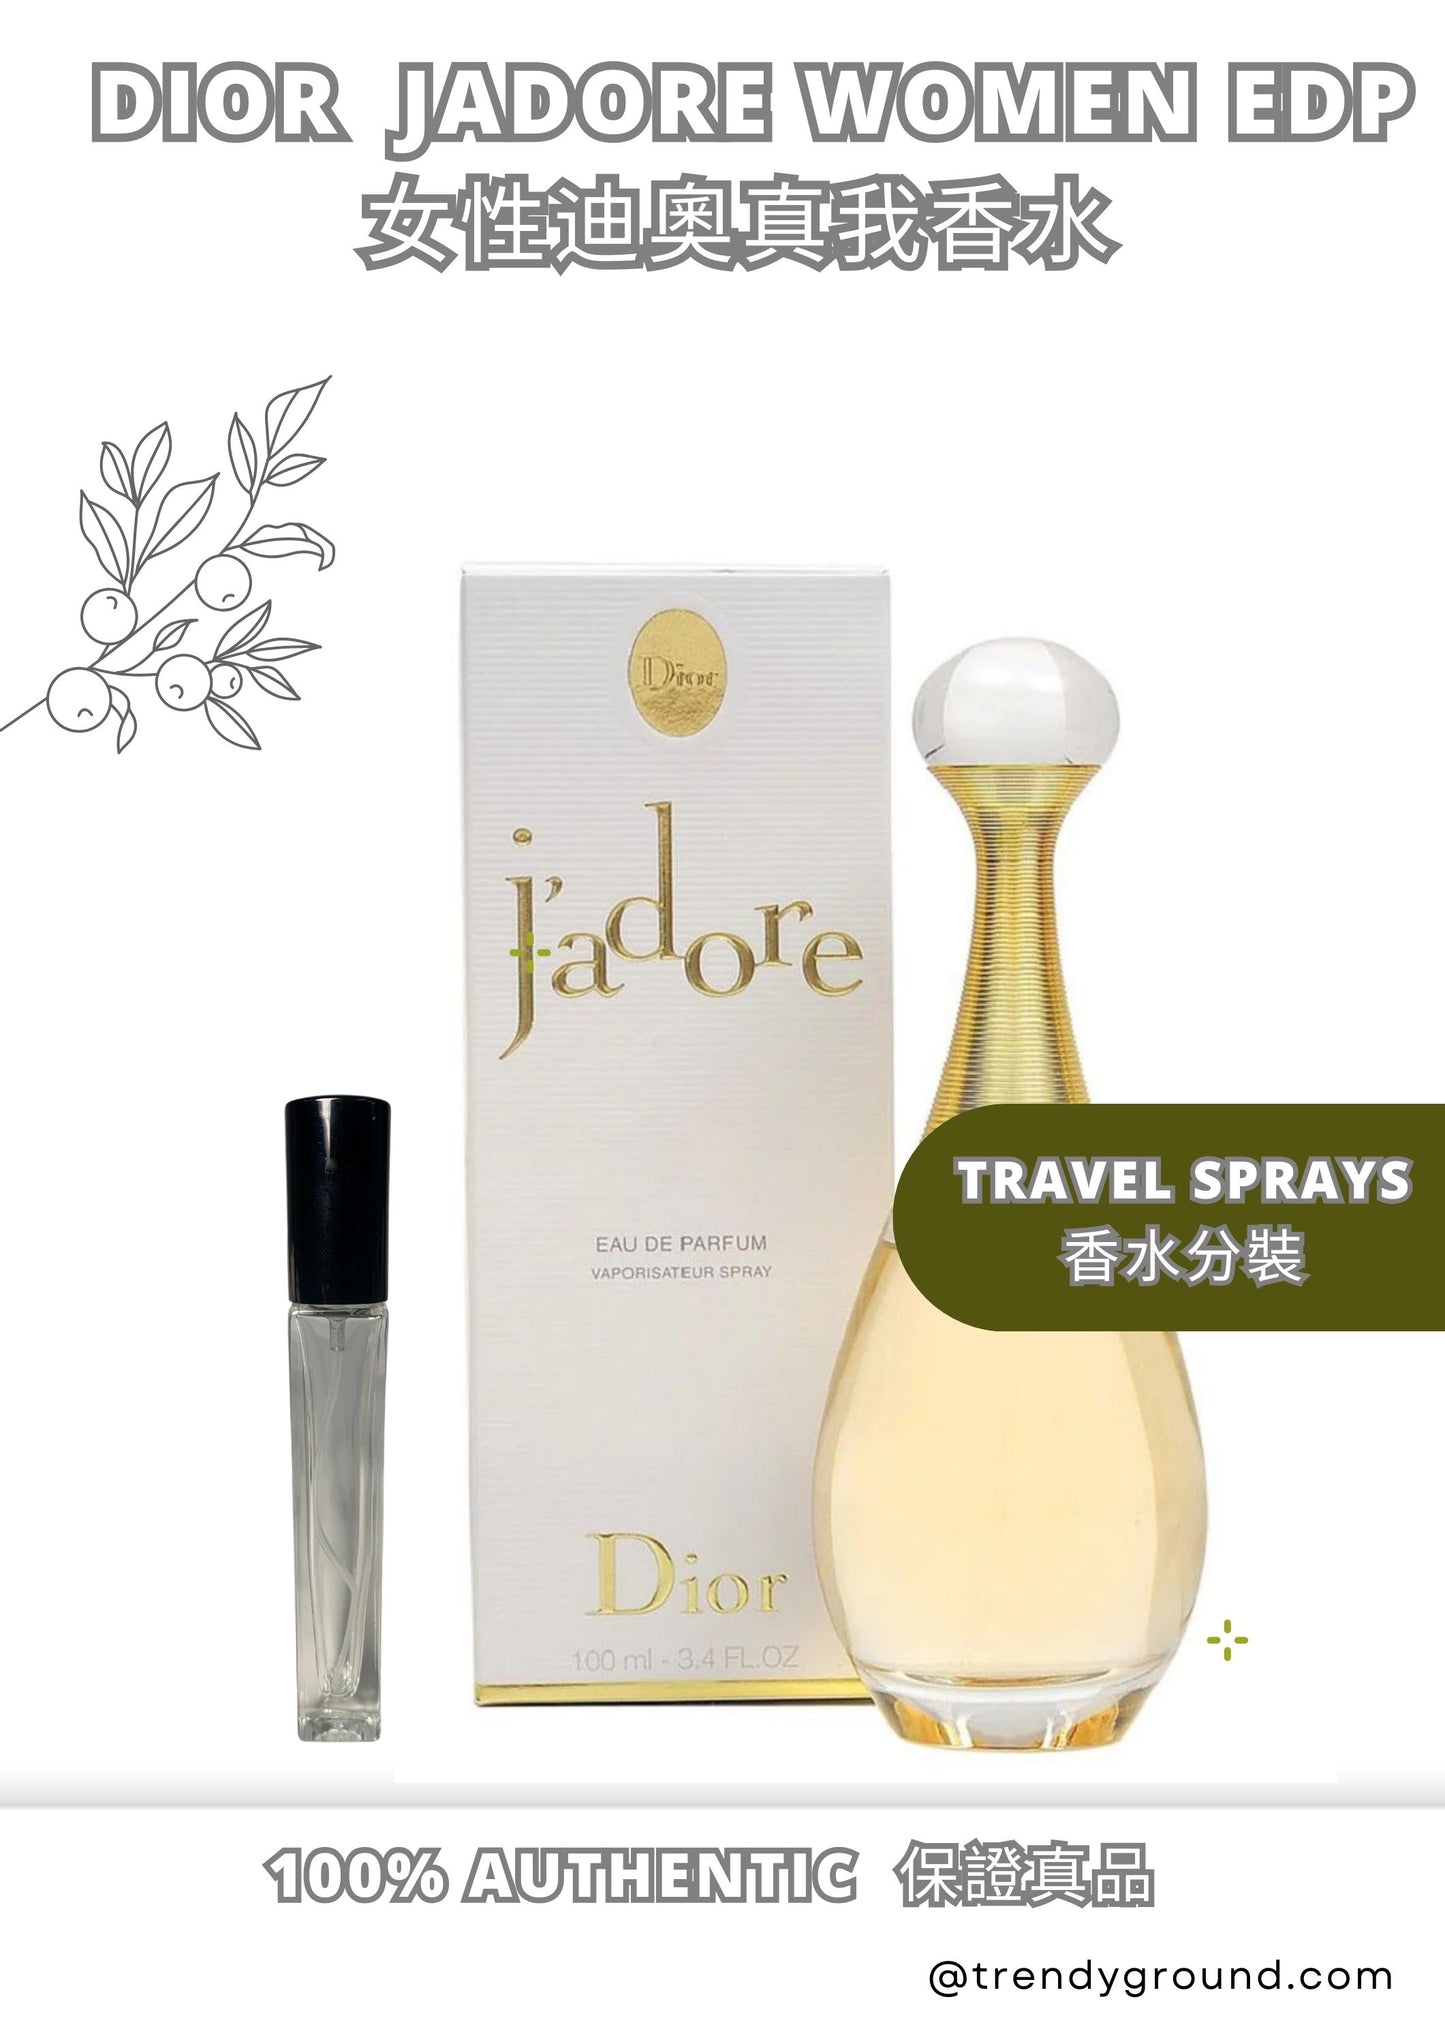 Christian Dior Jadore EDP Travel Sprays Sample Women 女性迪奧真我香水 分裝瓶